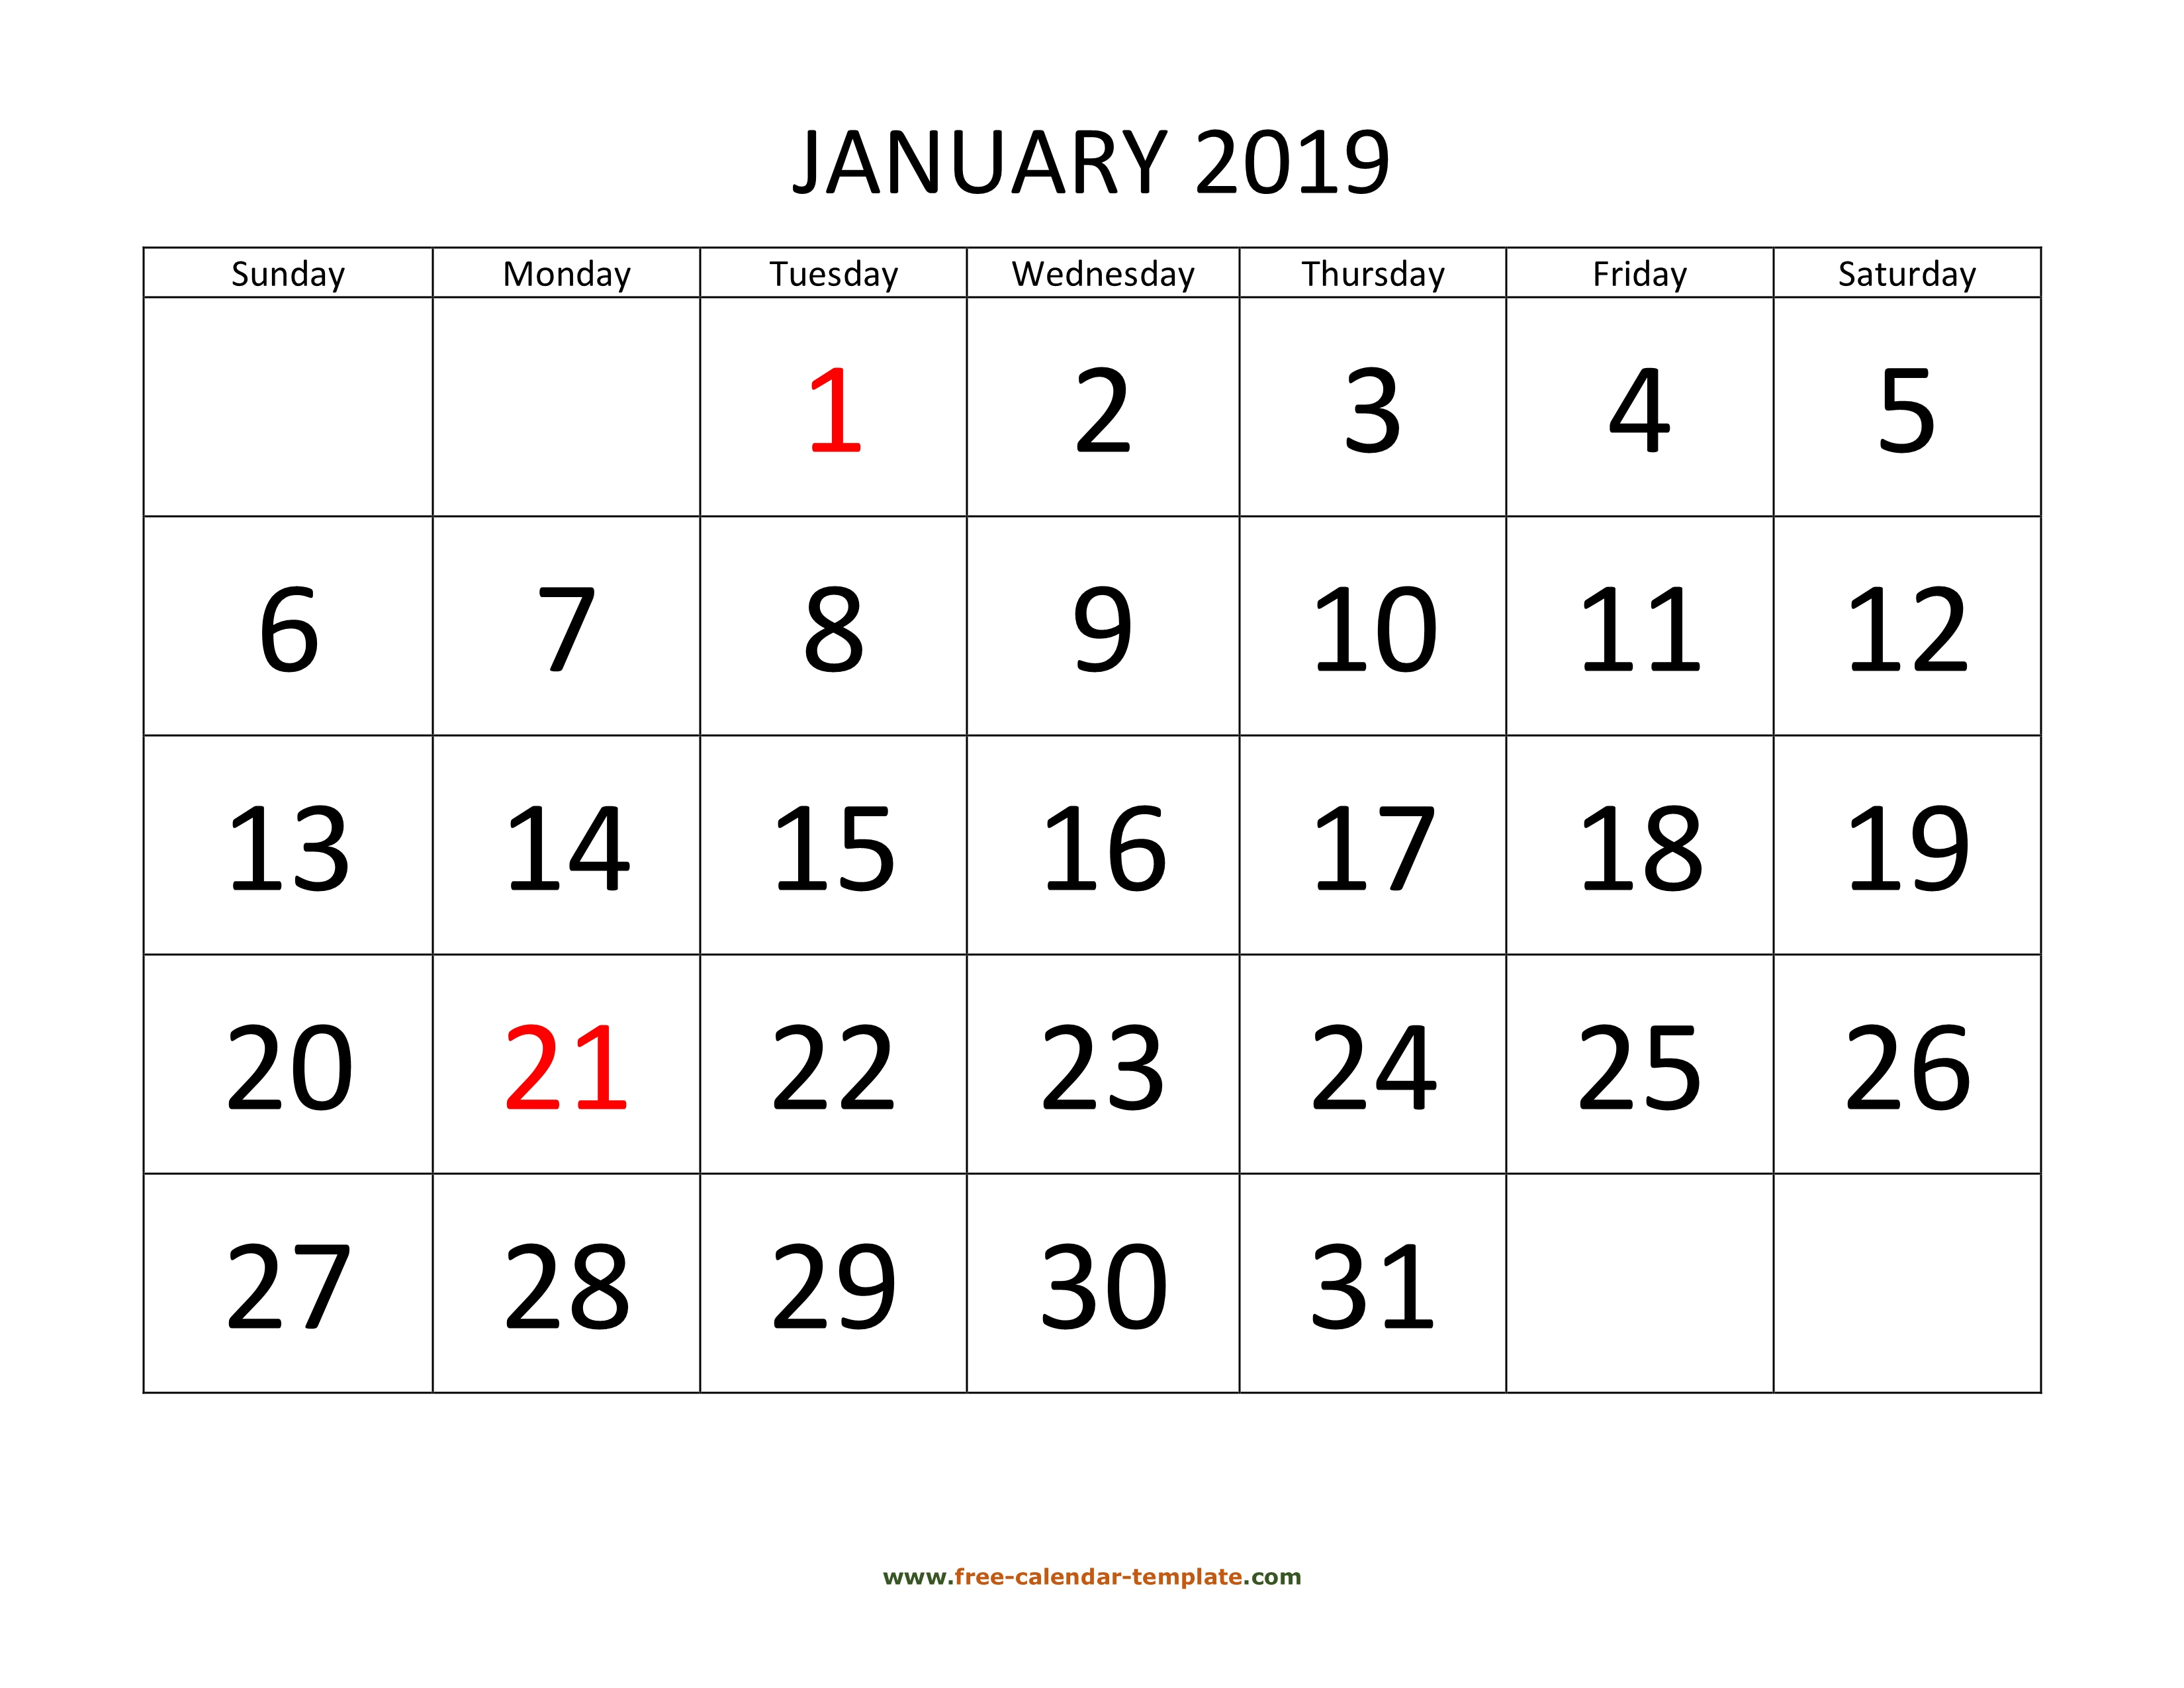 January 2019 Calendar Designed With Large Font (Horizontal